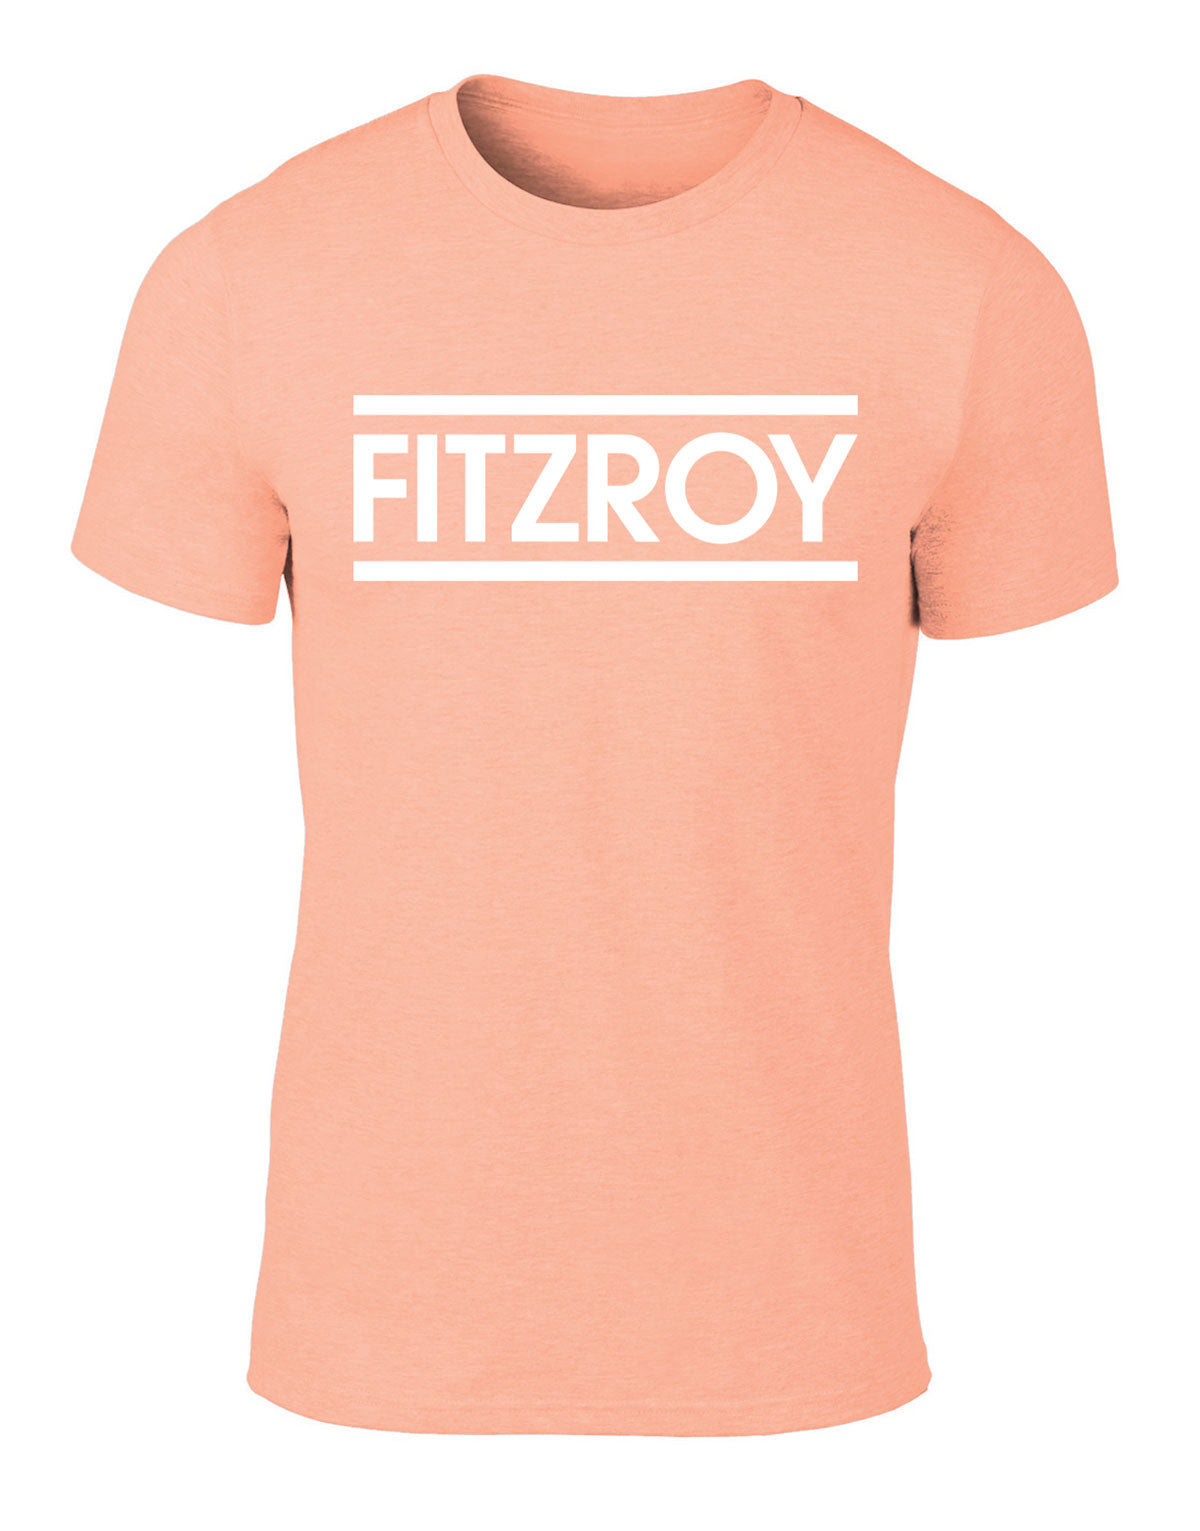 Fitzroy Elemental T-Shirt